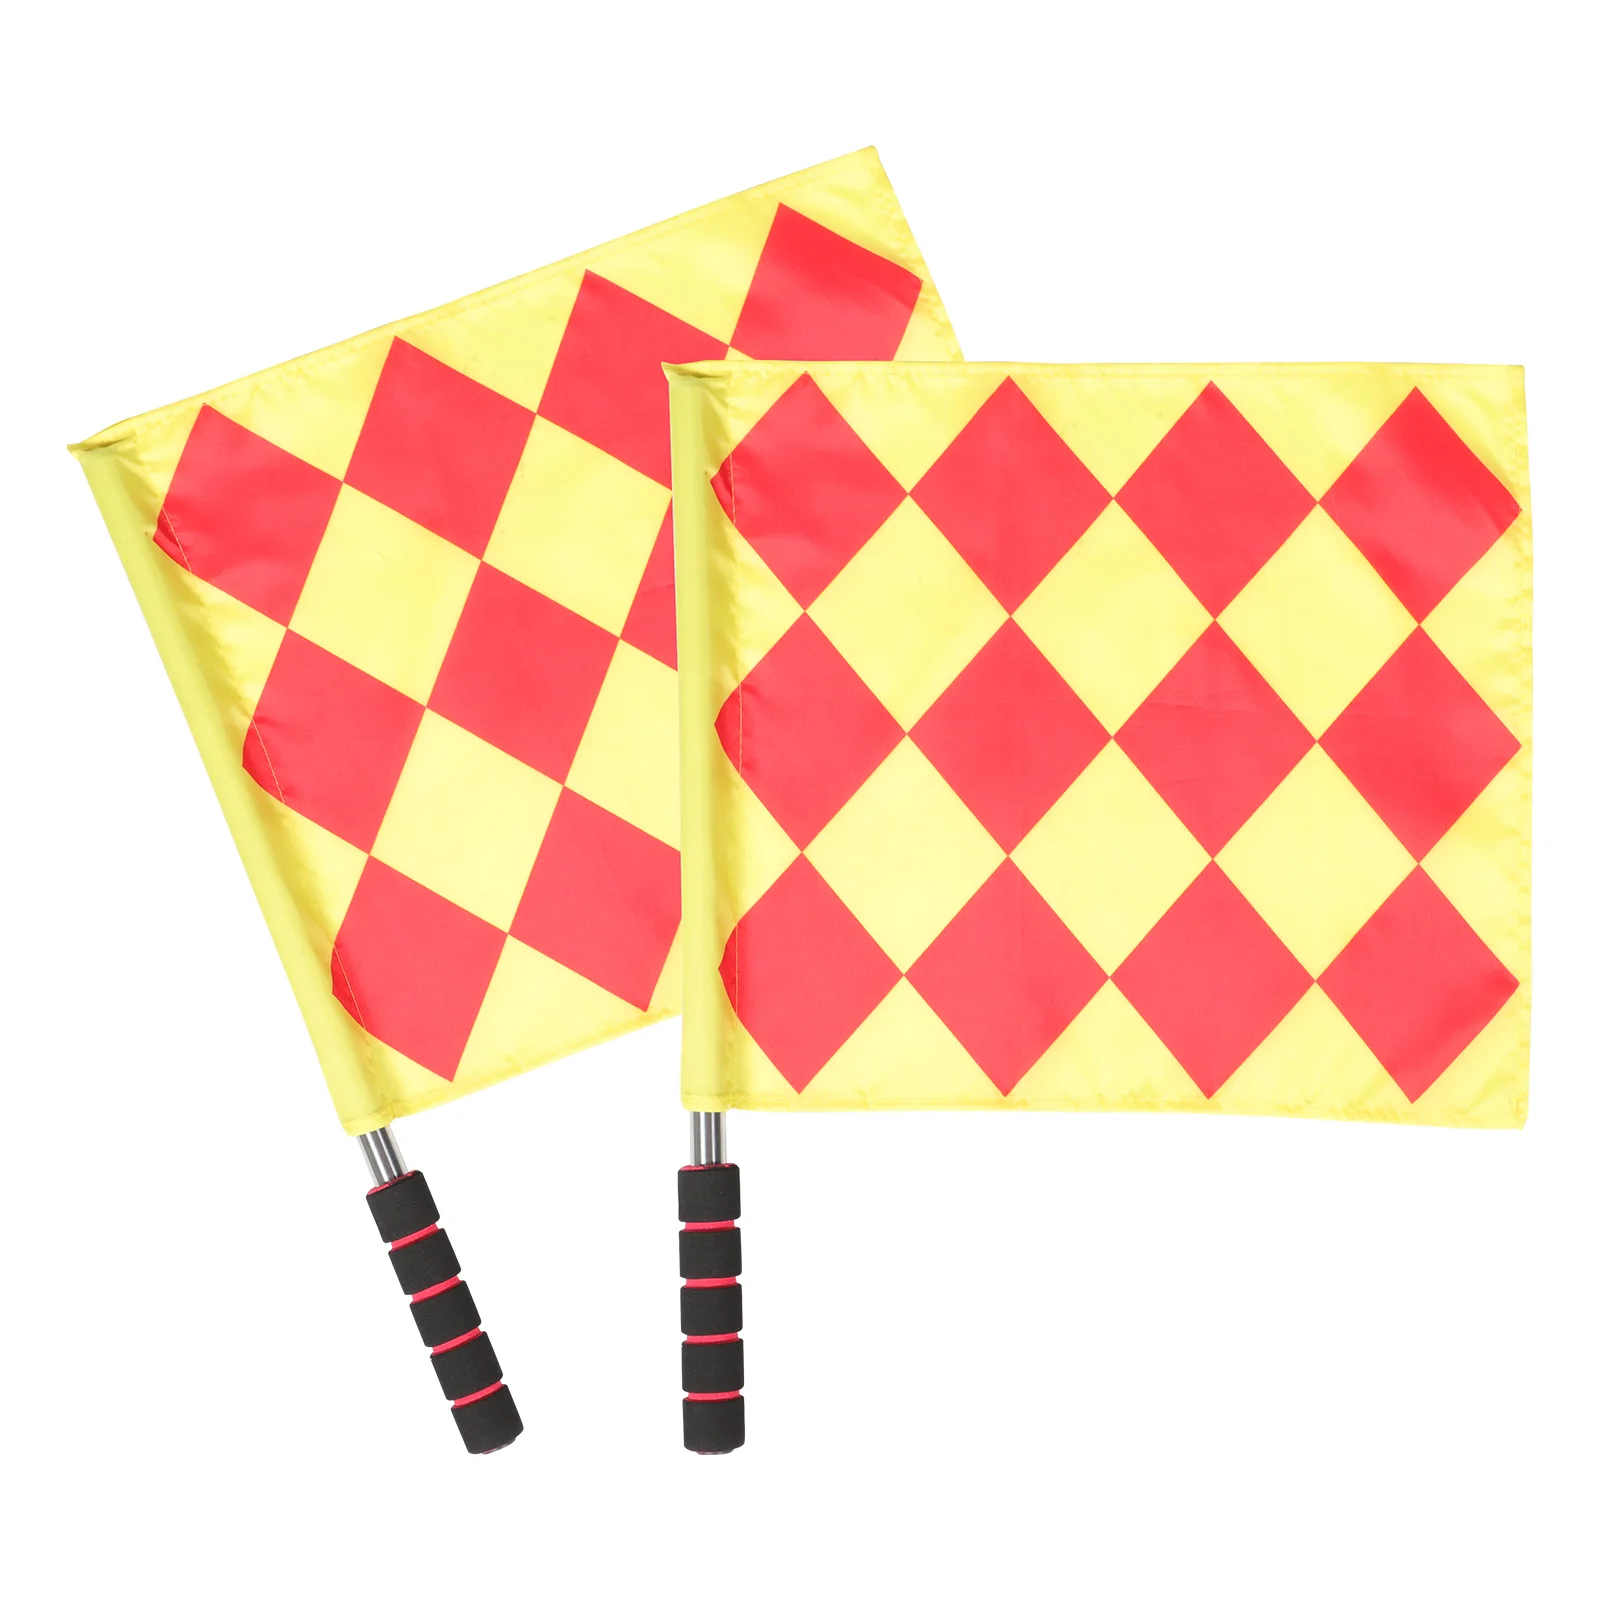 

2 Pcs Football Referee Flag Orange Soccer Match Traffic Signal Flags Hand Crank Polyester Handheld Waving For Racing